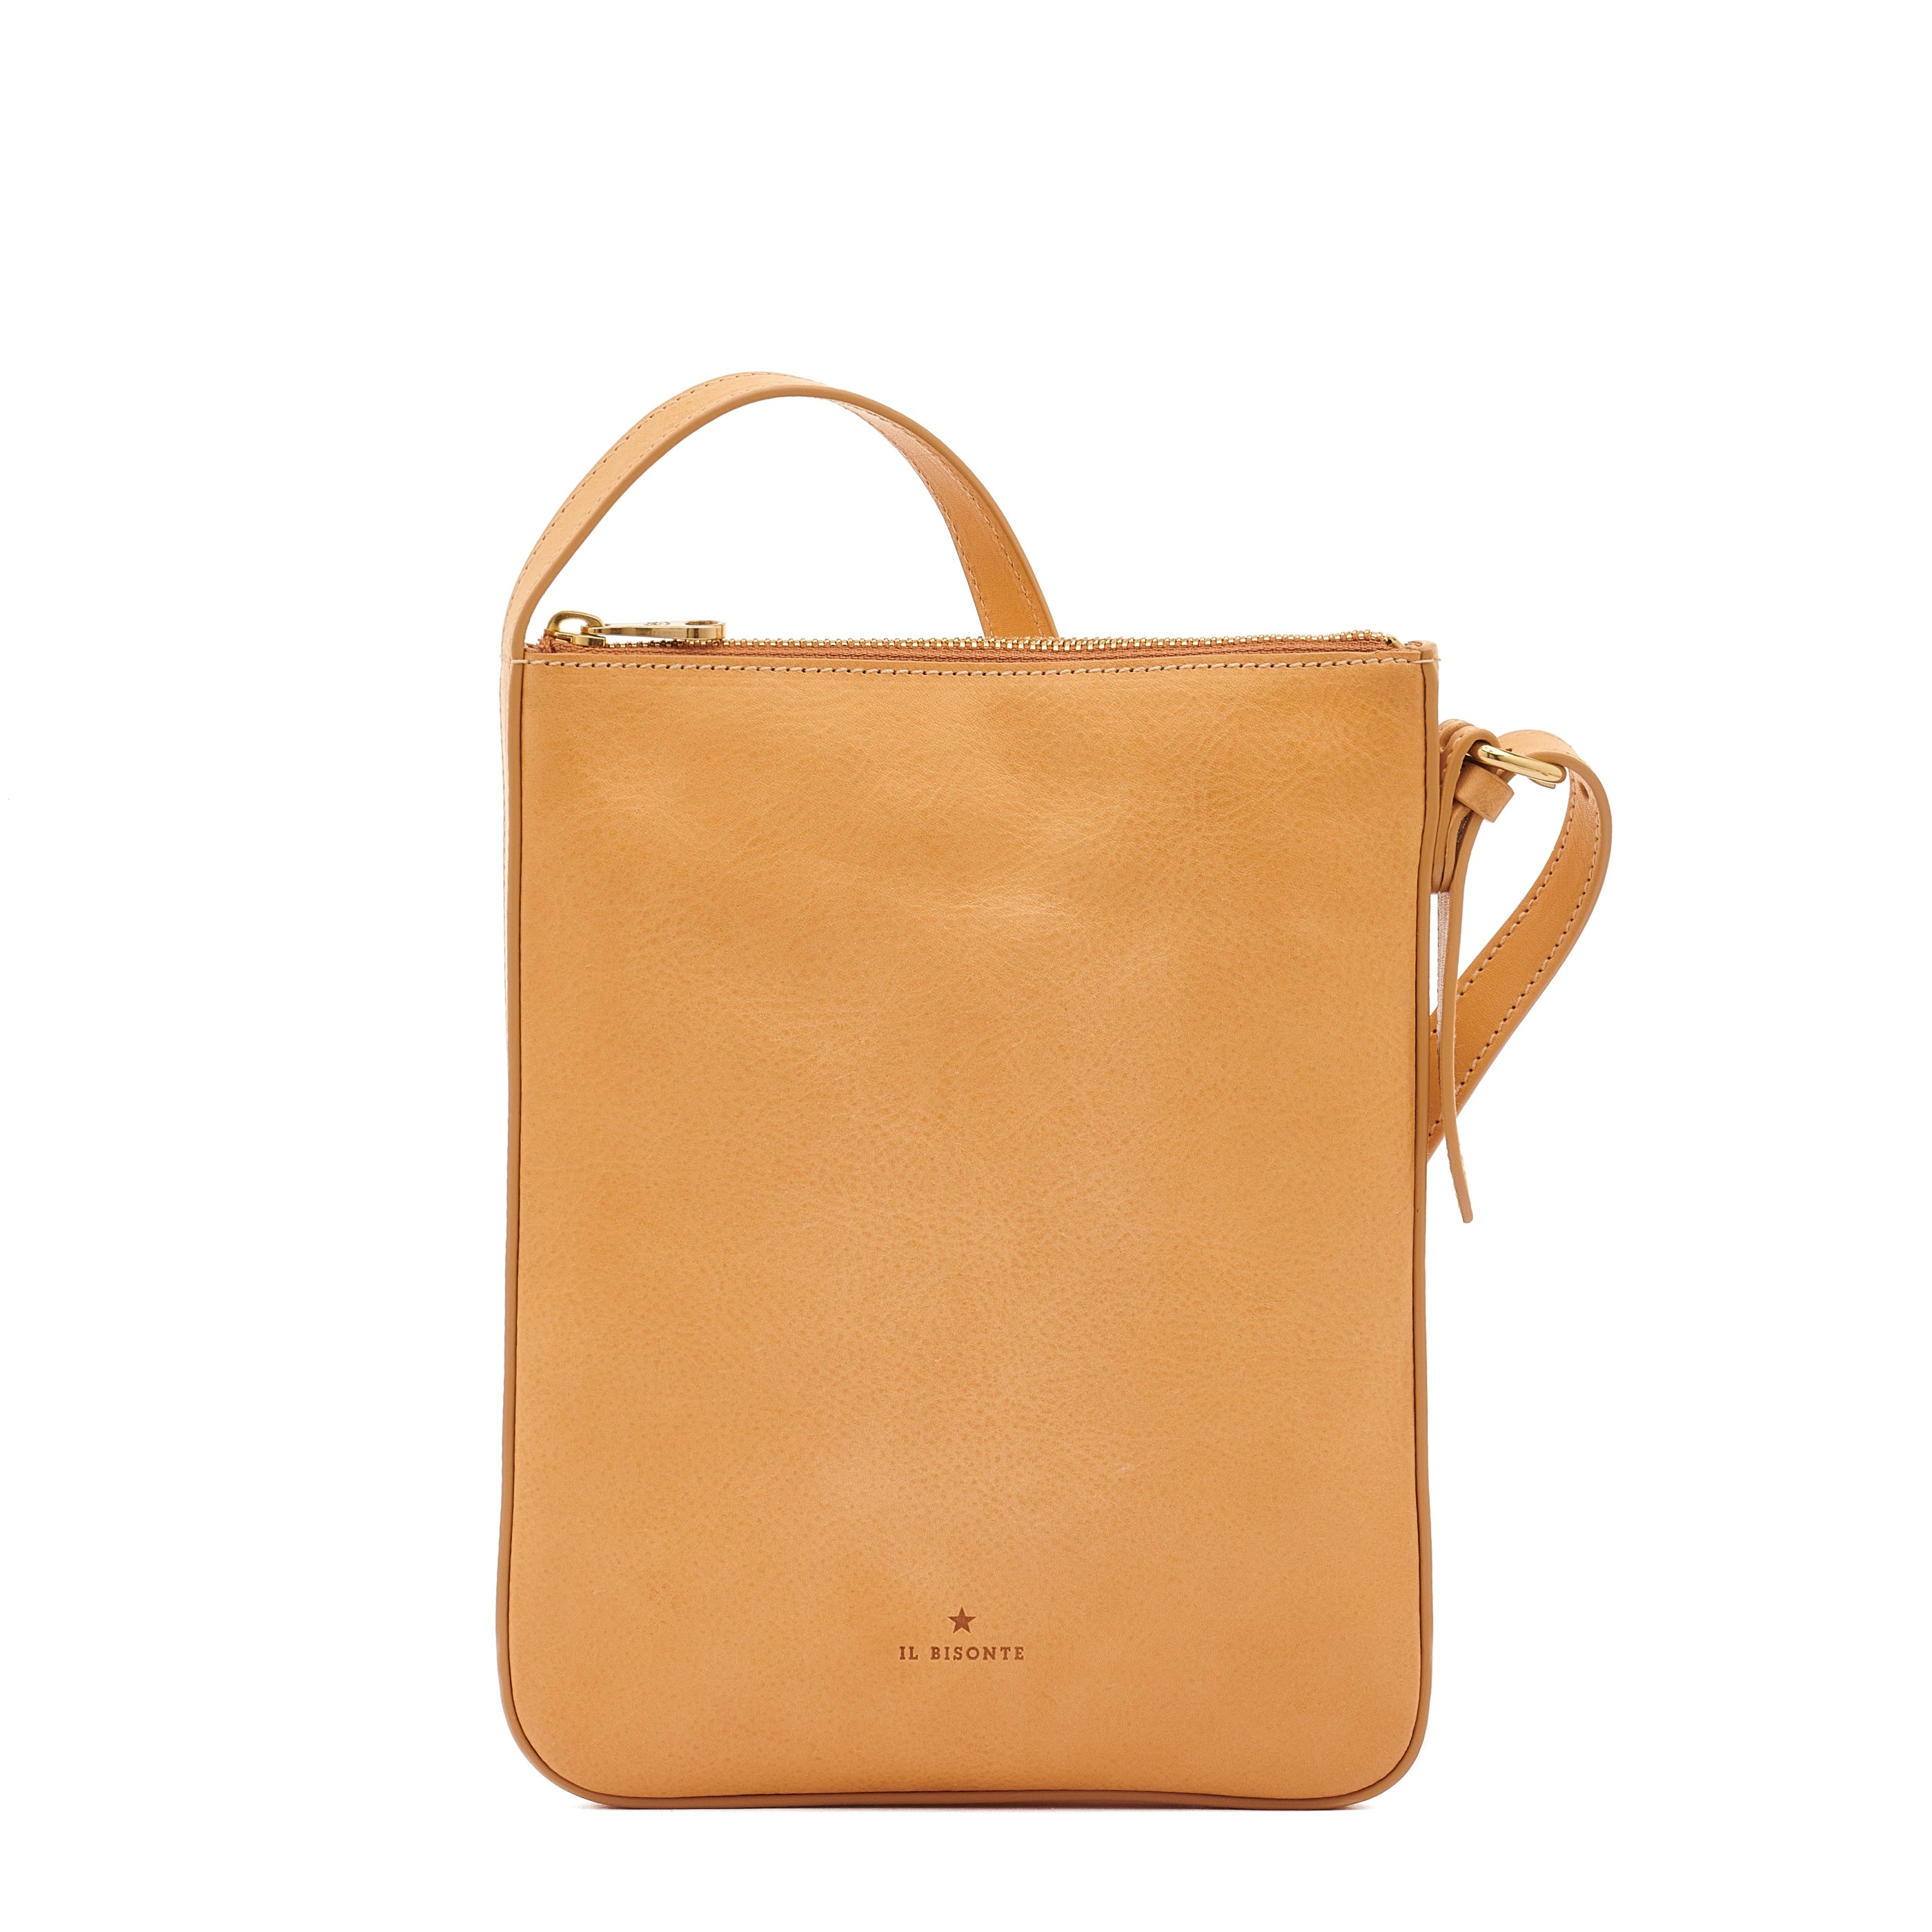 Loop | Women's crossbody bag in leather color natural